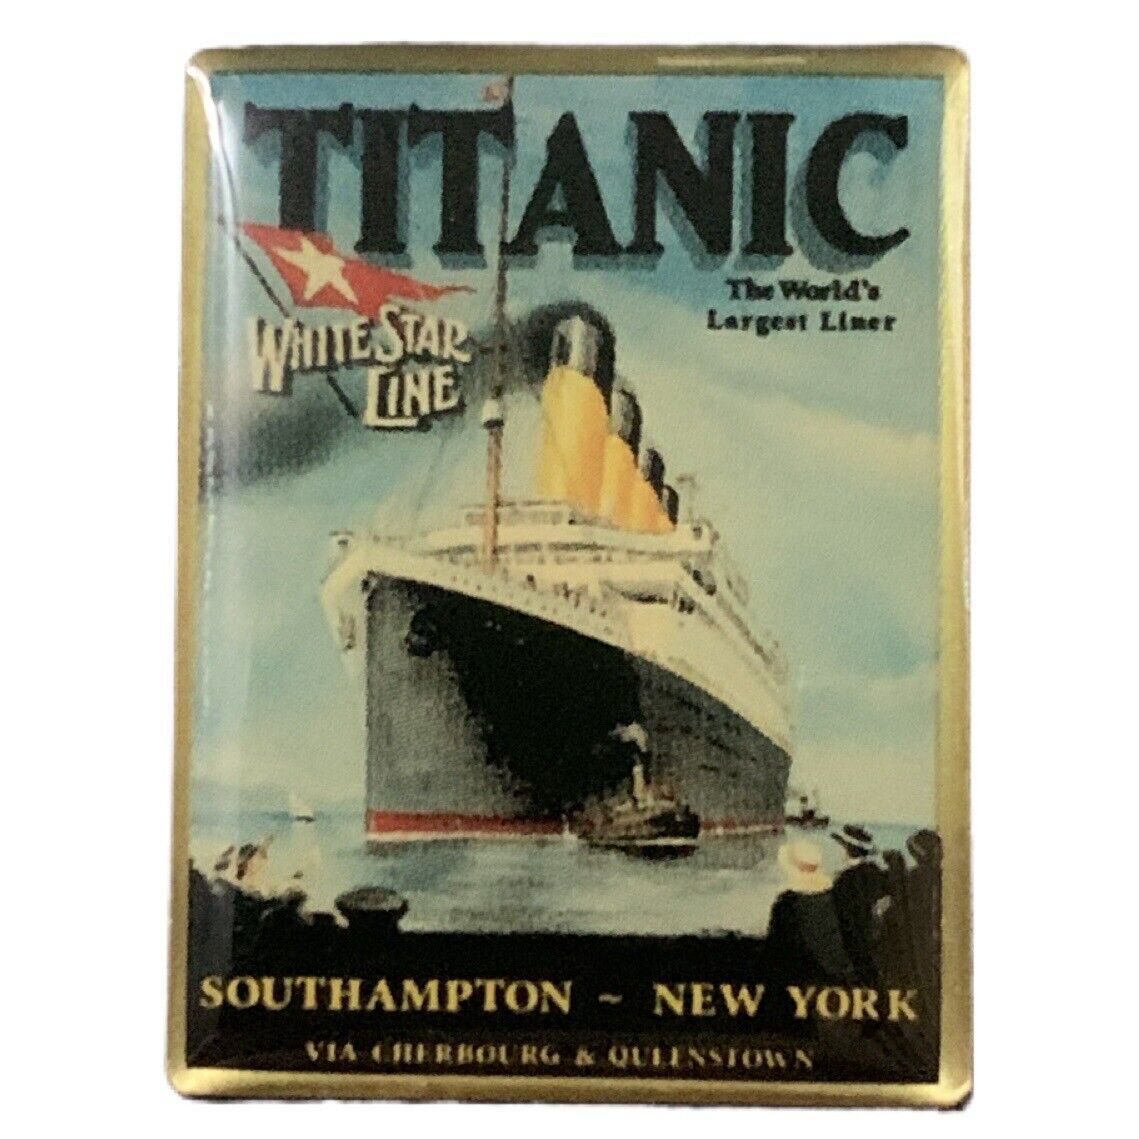 Vintage White Star Line Titanic The World’s Largest Liner Souvenir Pin